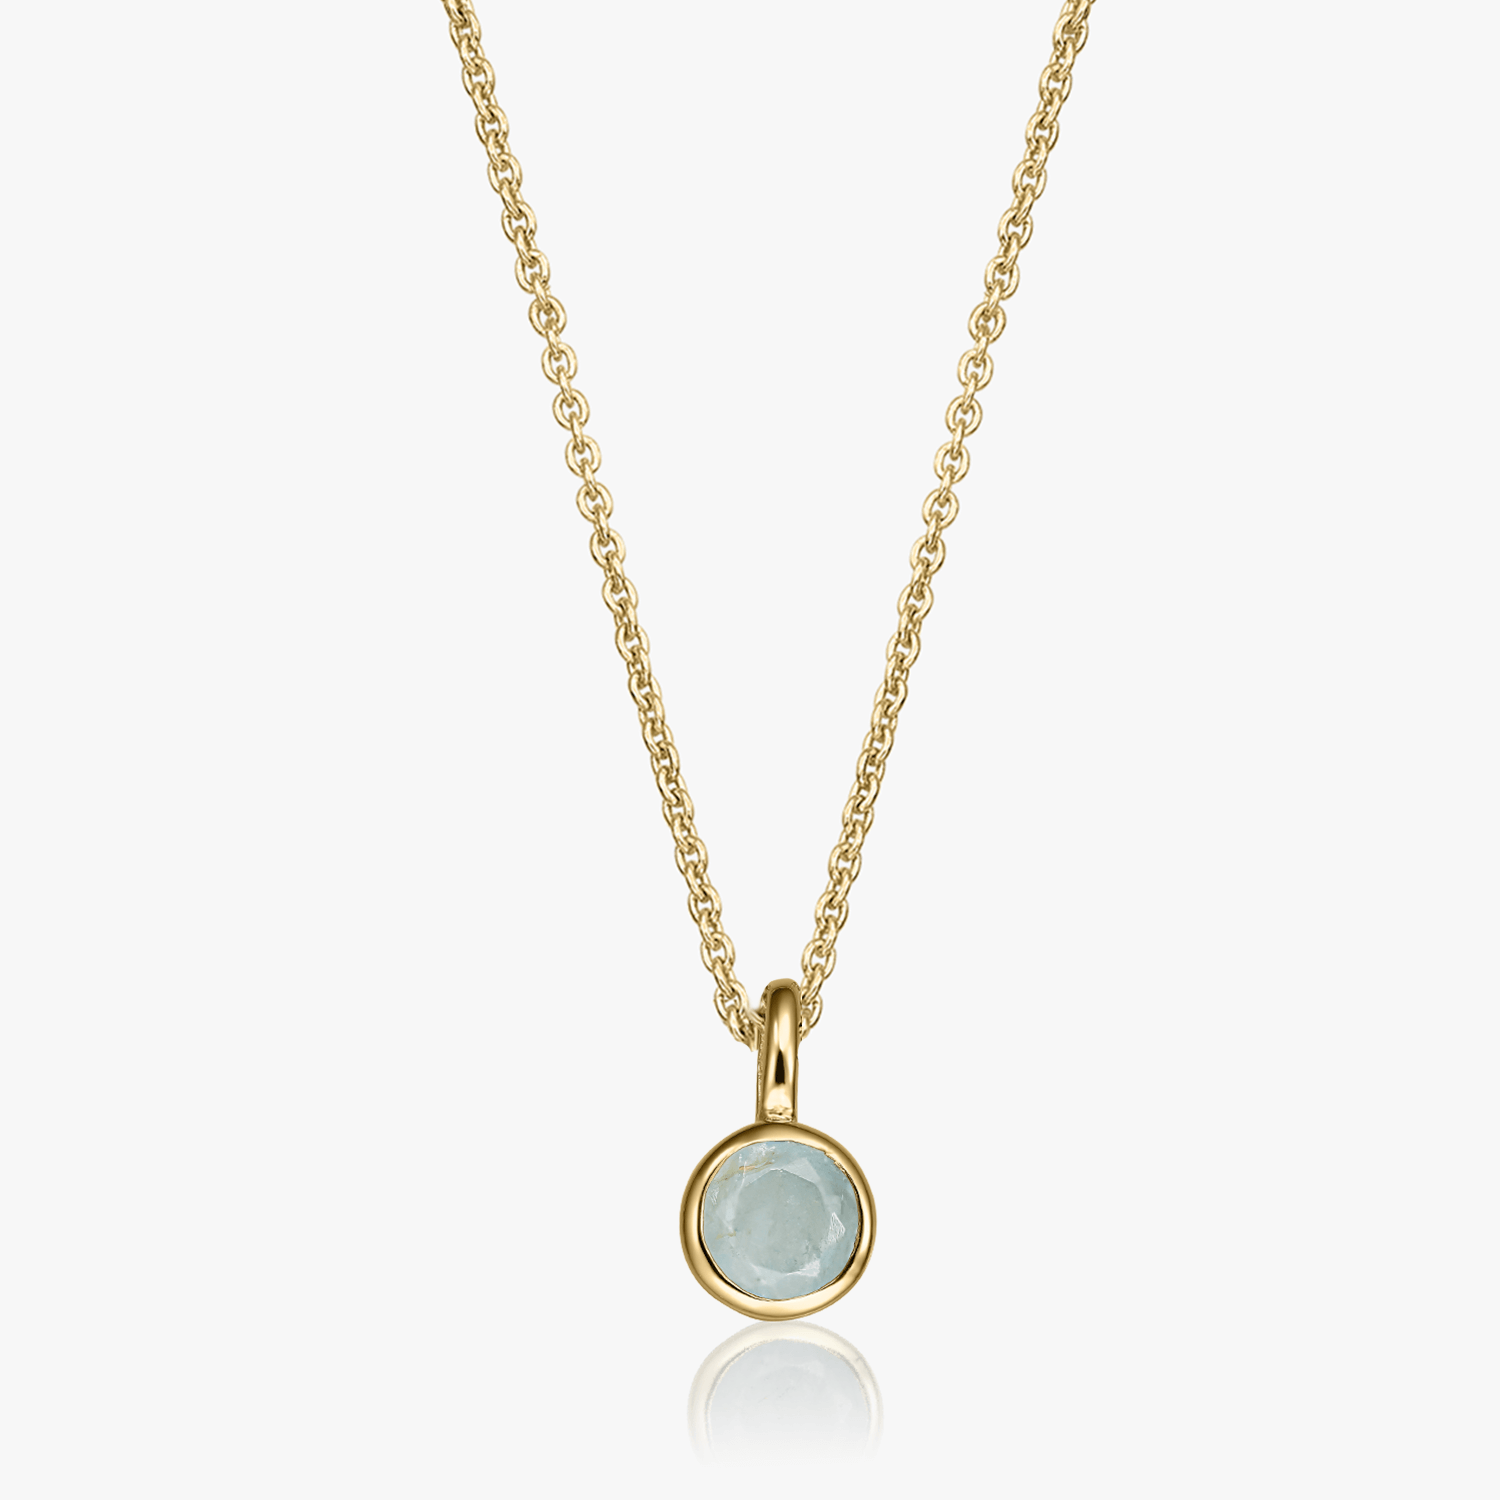 Birthstone Golden March Silver Necklace - Aquamarine